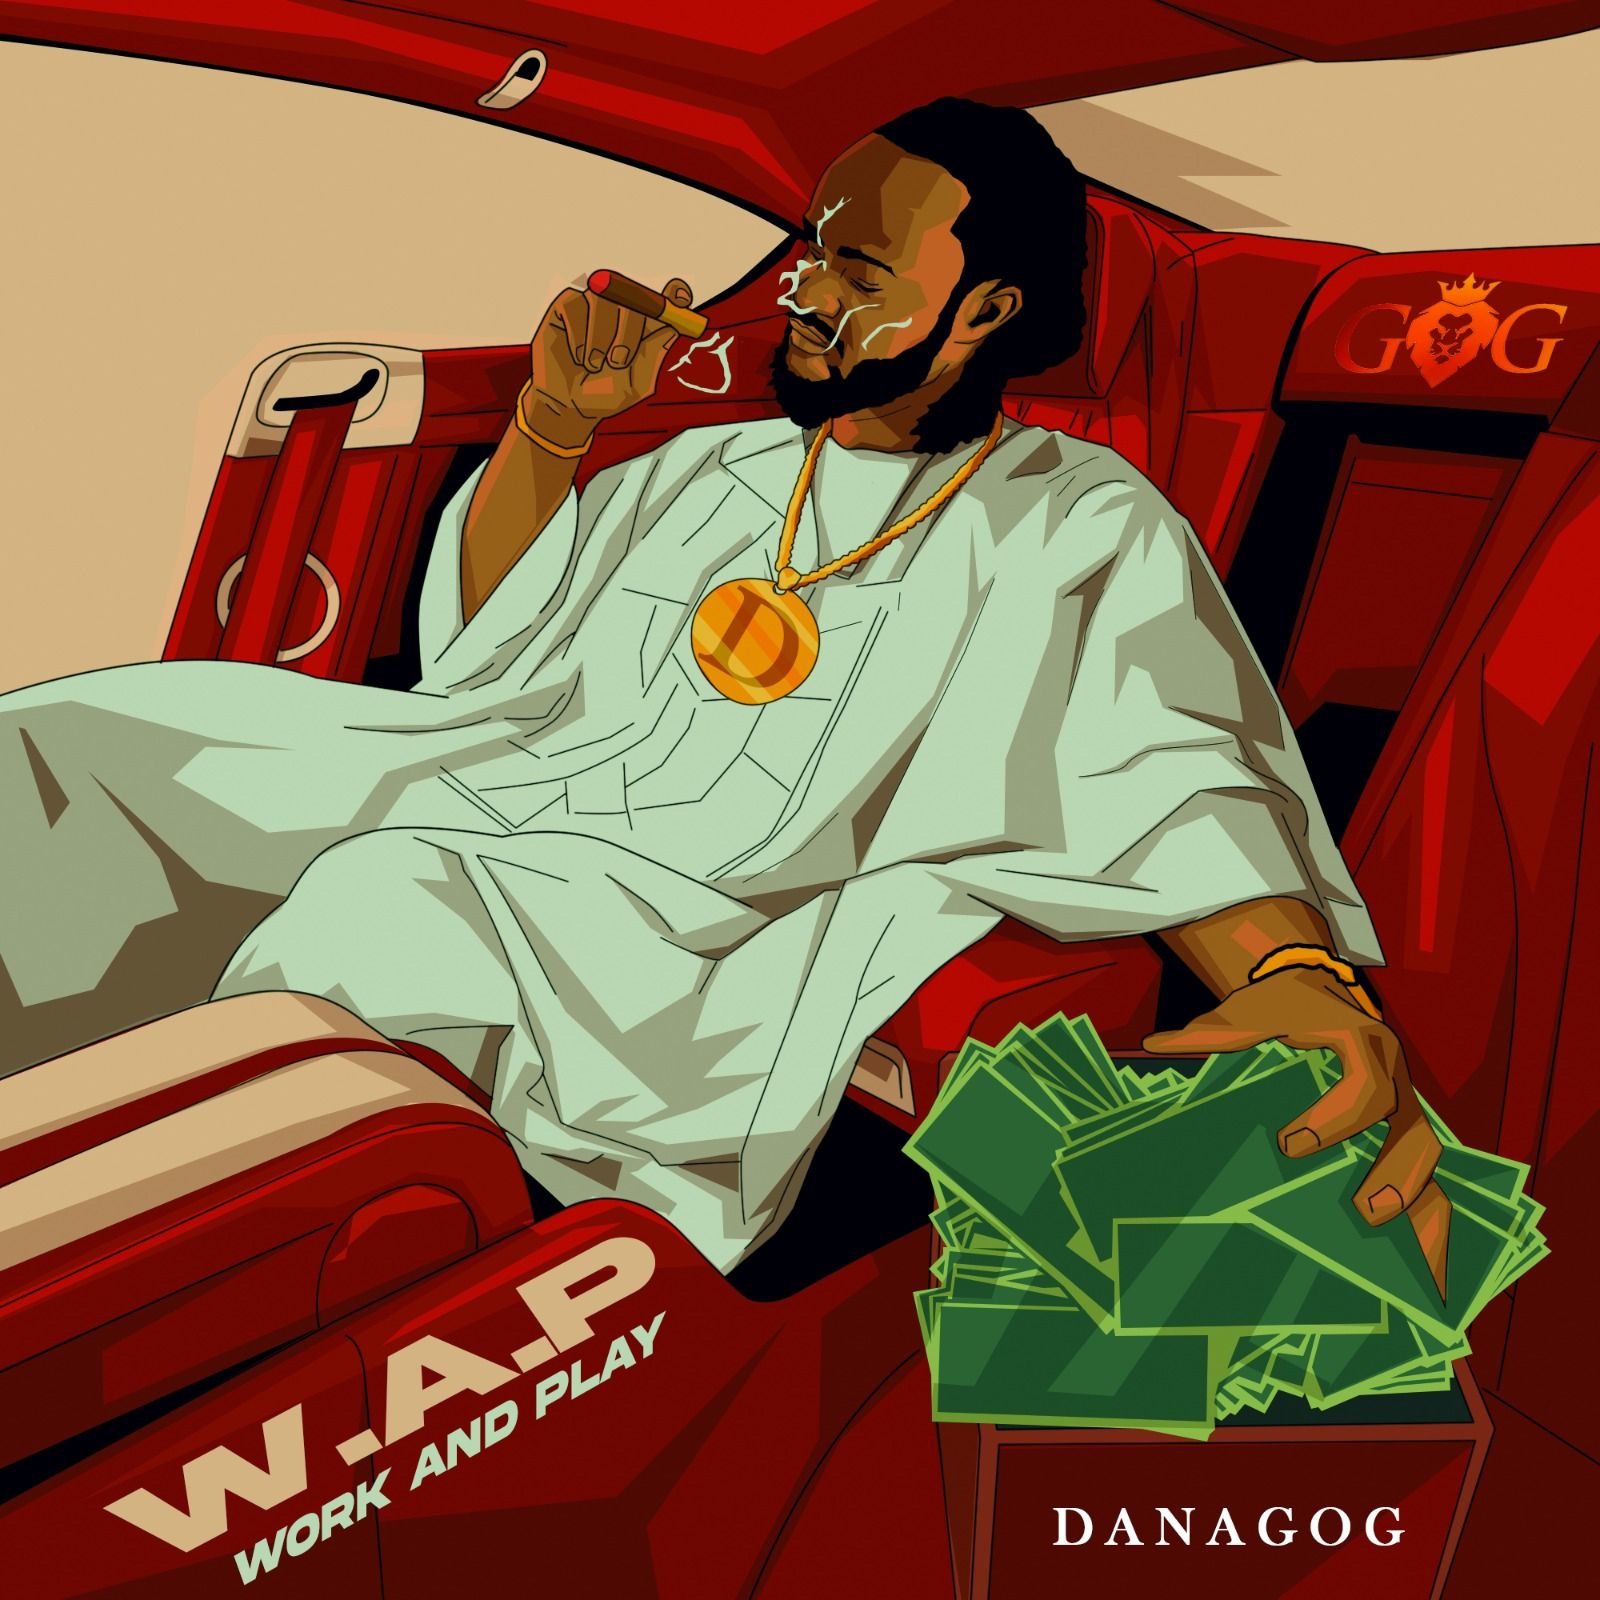 DANAGOG - WAP (Work and Play)